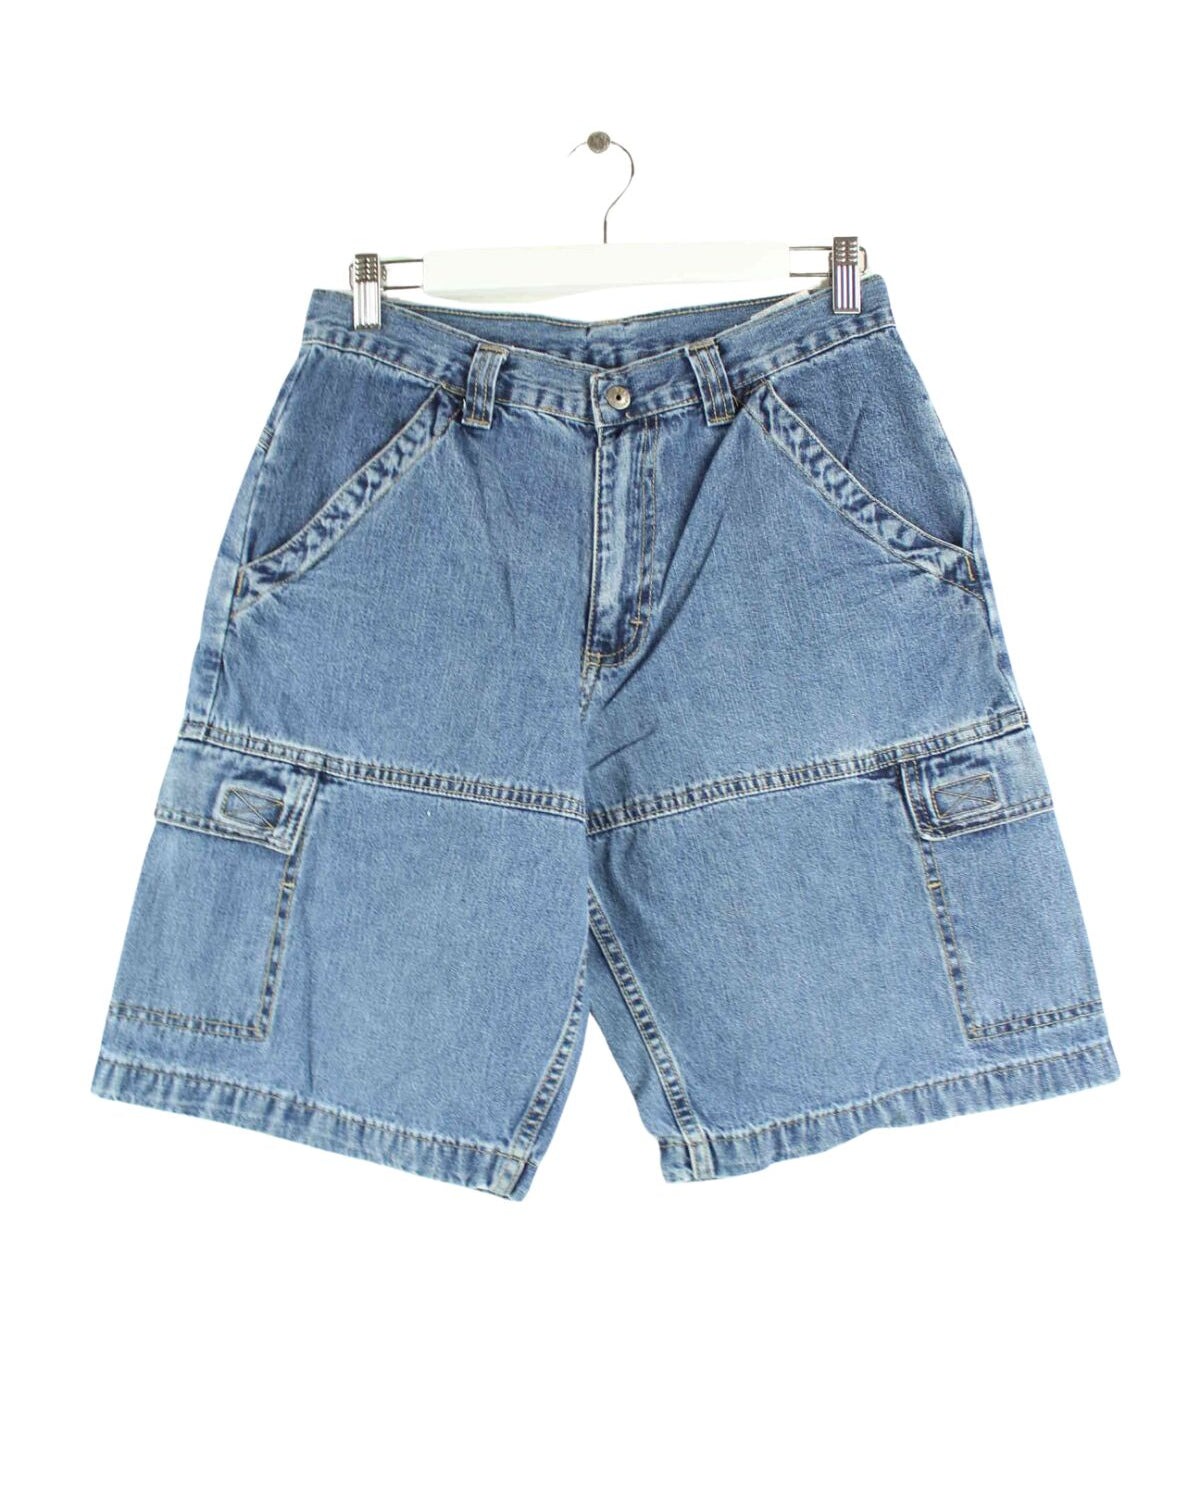 Wrangler Carpenter Jorts / Jeans Shorts Blau W26 (front image)